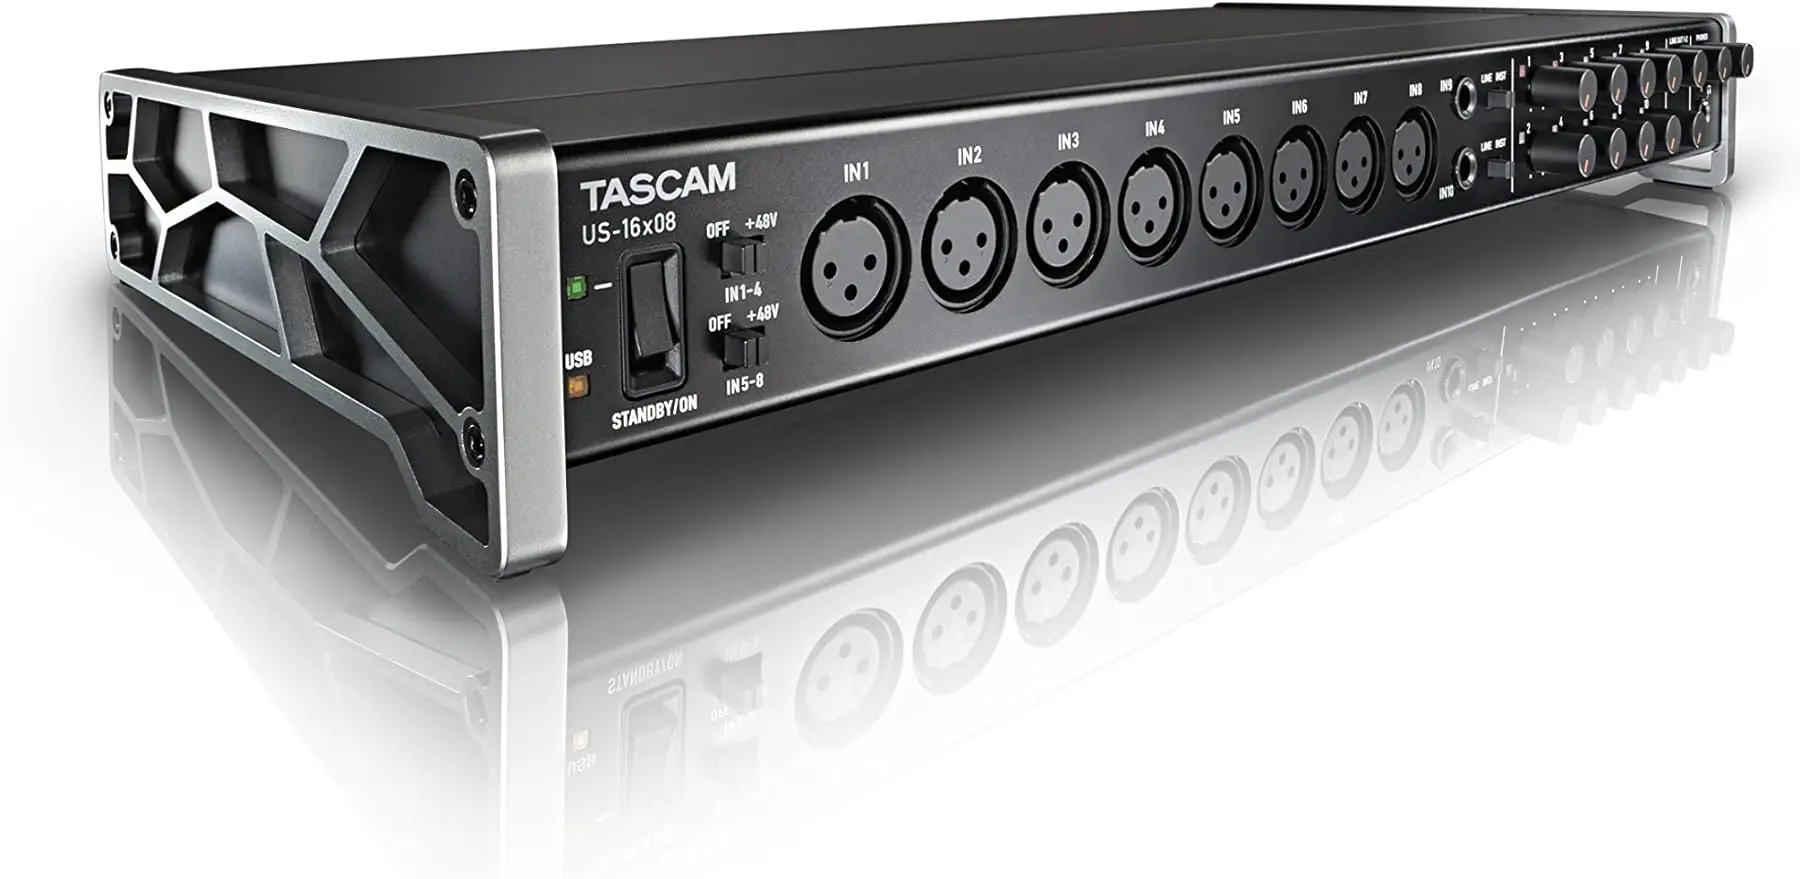 

Tascam US-16x08 Rackmount USB Audio/MIDI Interface for Recording, Drum Recording, 8 XLR/8 1/4" Inputs, 8 Outputs,